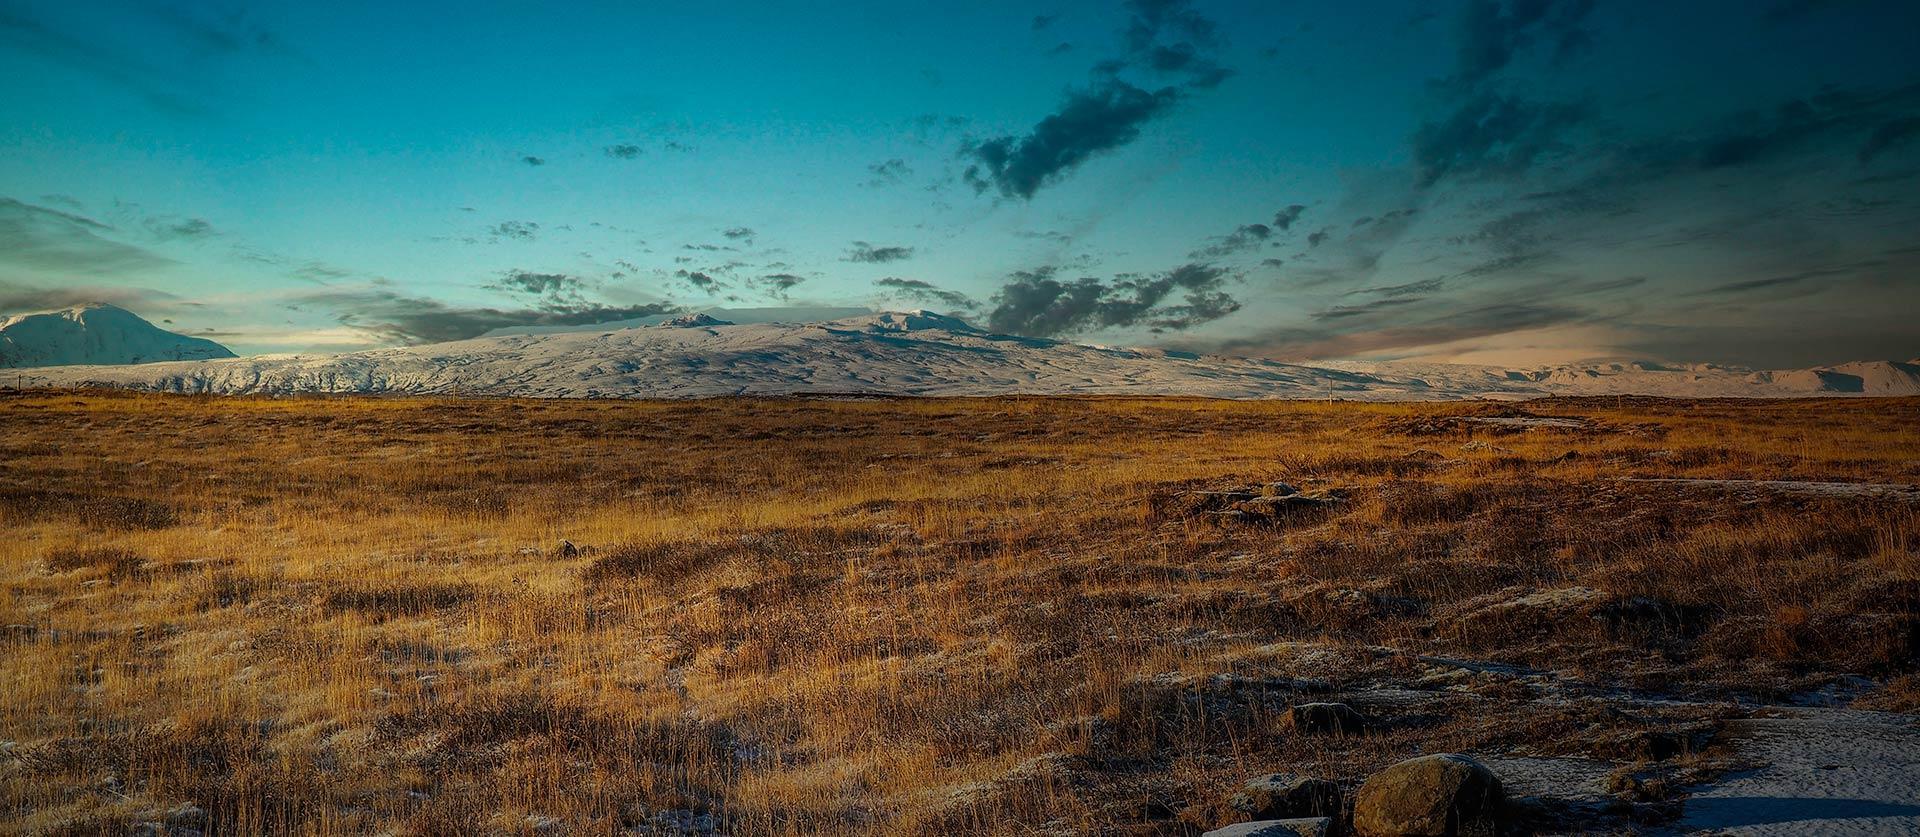 The Icelandic plains from Thingvellir National Park